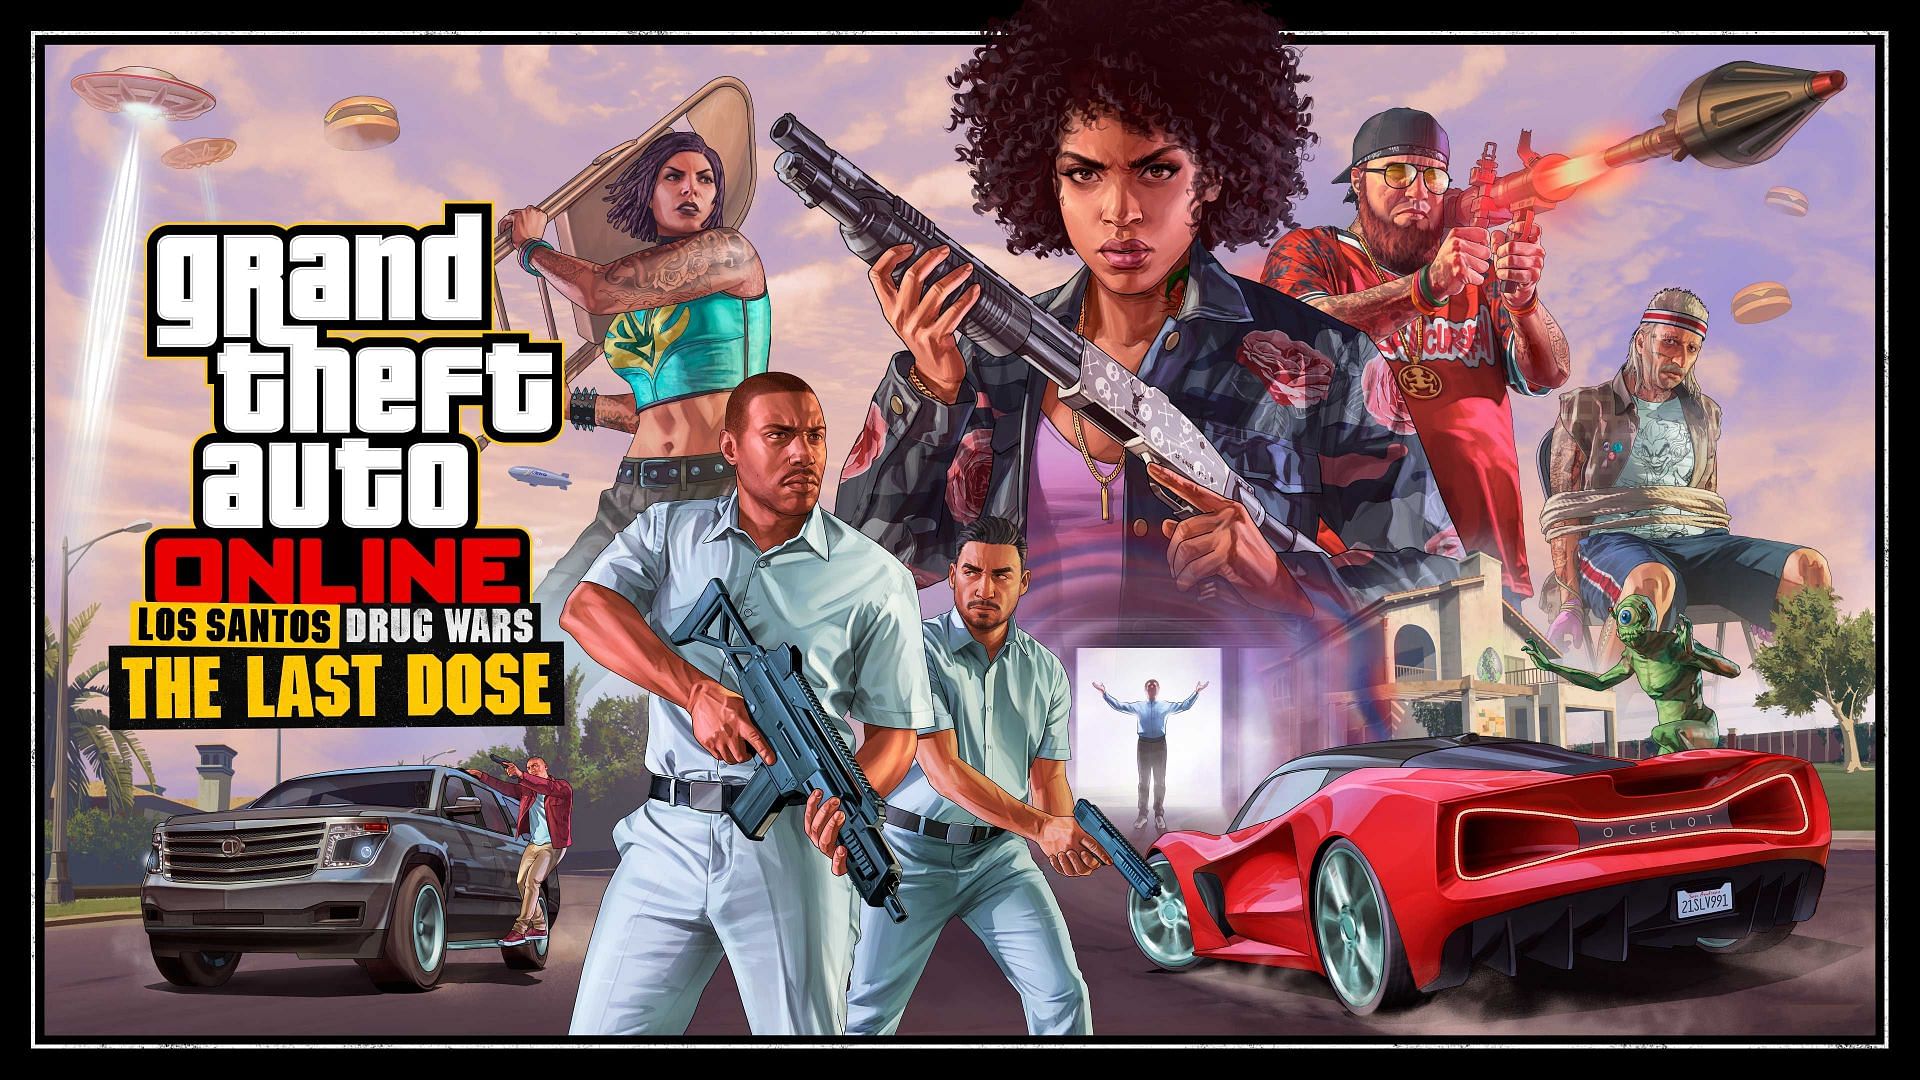 The Last Dose is the second half of the Los Santos Drug Wars update (Image via Rockstar Games)